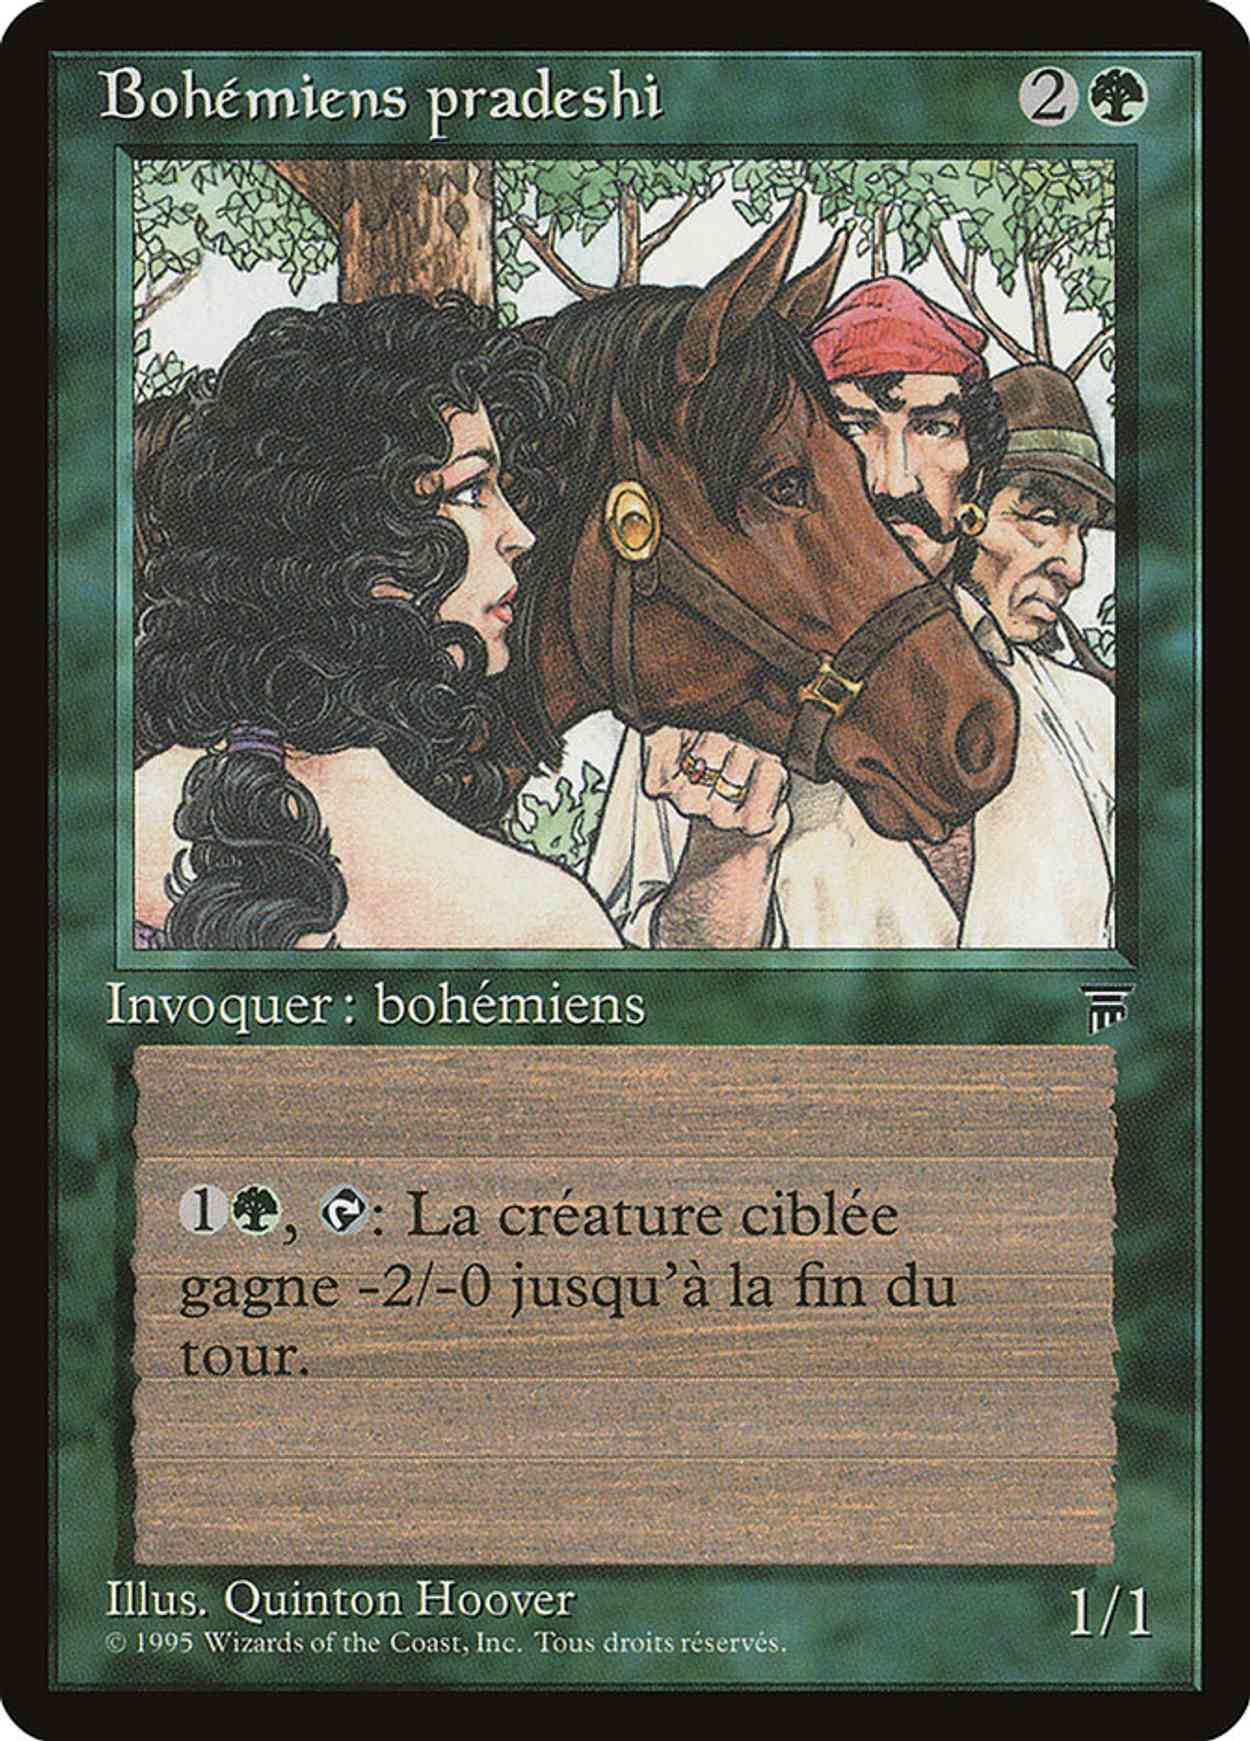 Pradesh Gypsies (French) - "Bohemiens pradeshi" magic card front